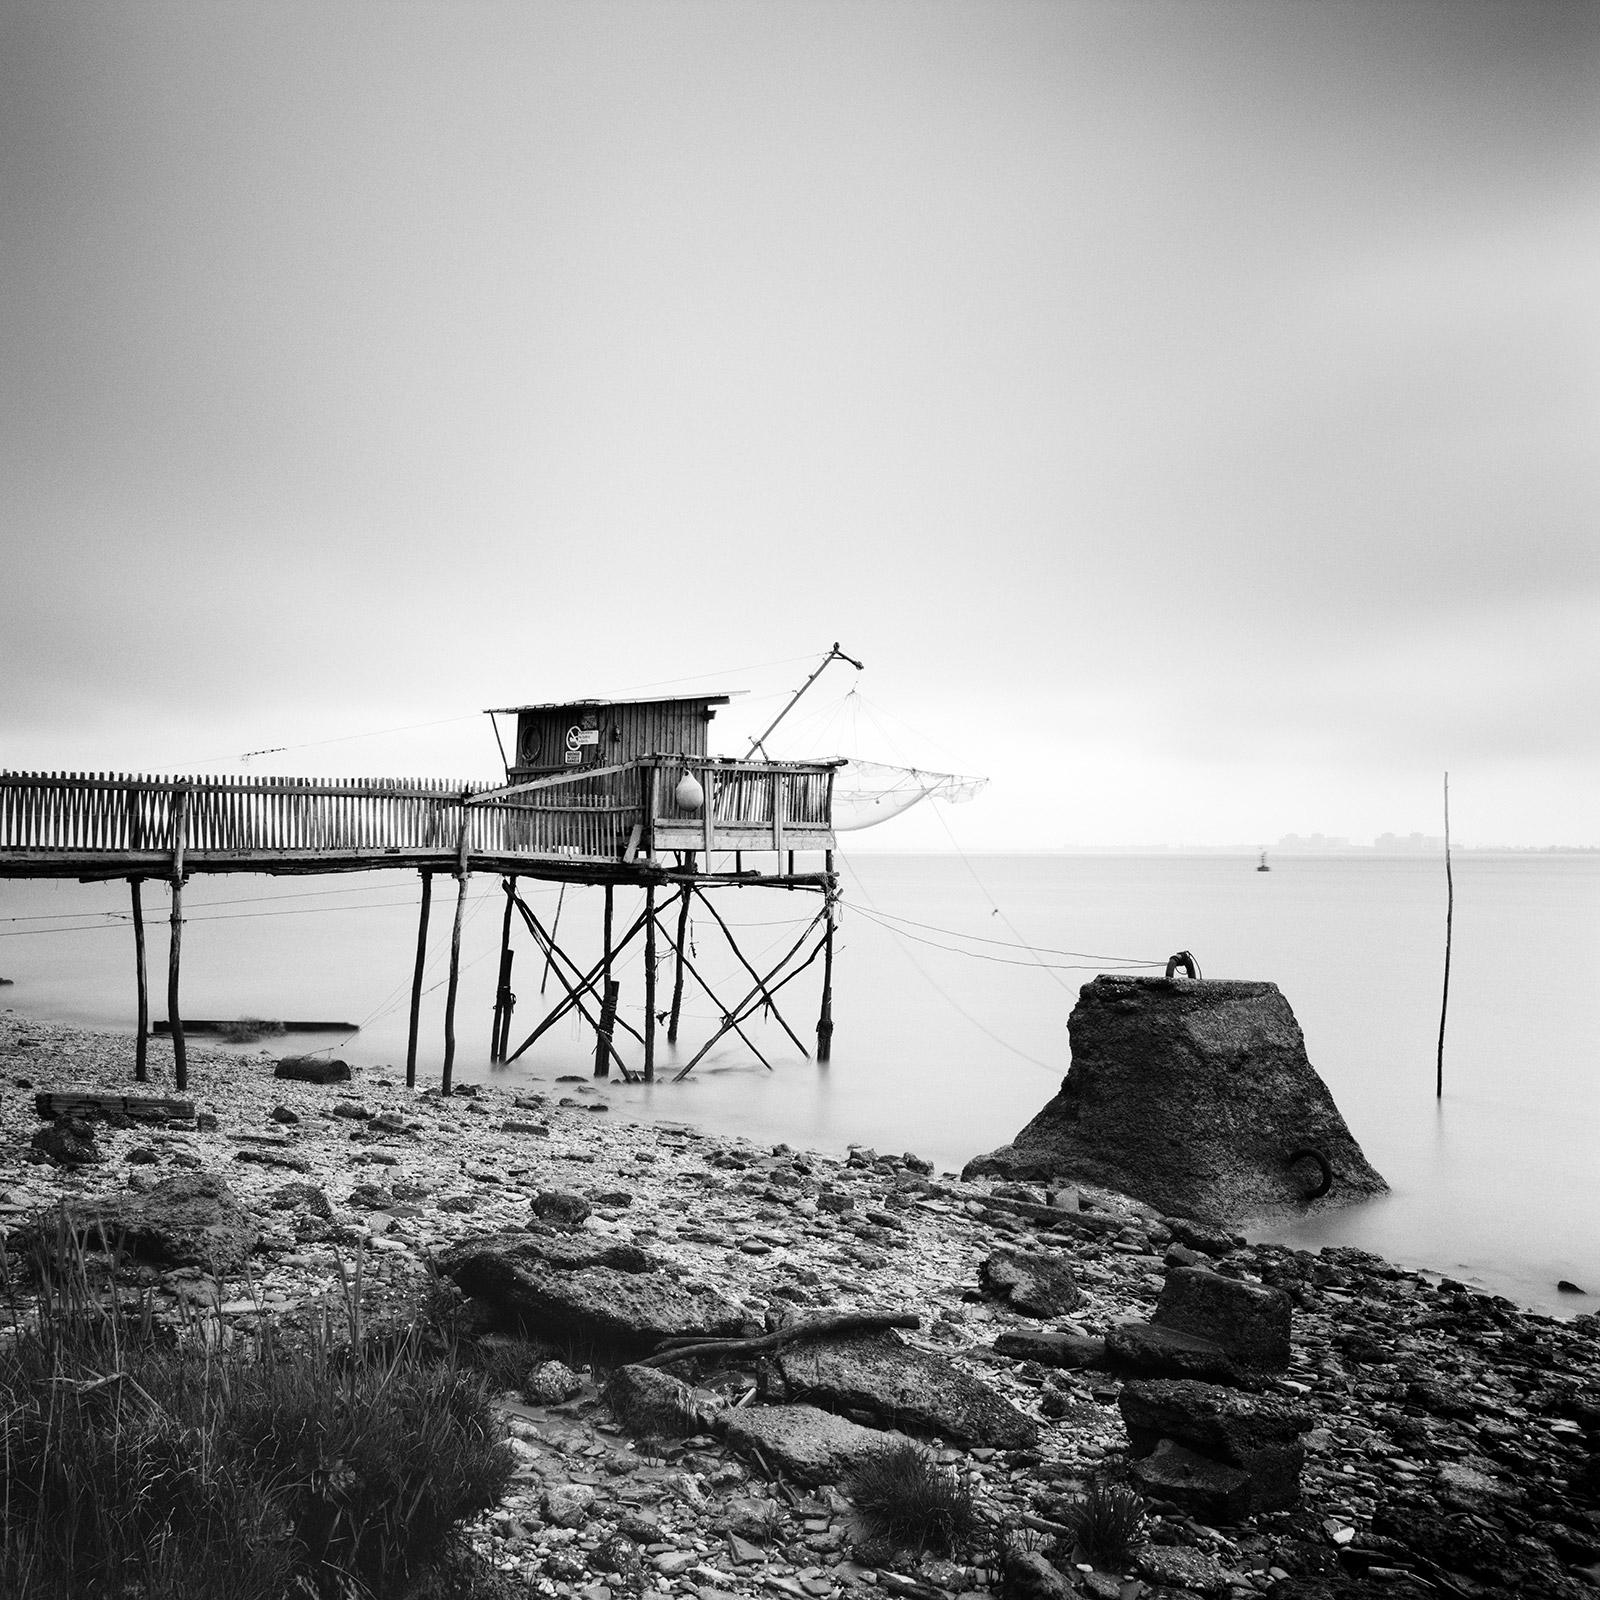 Stilt House, Fishing, shellfish, France, black and white photography landscape